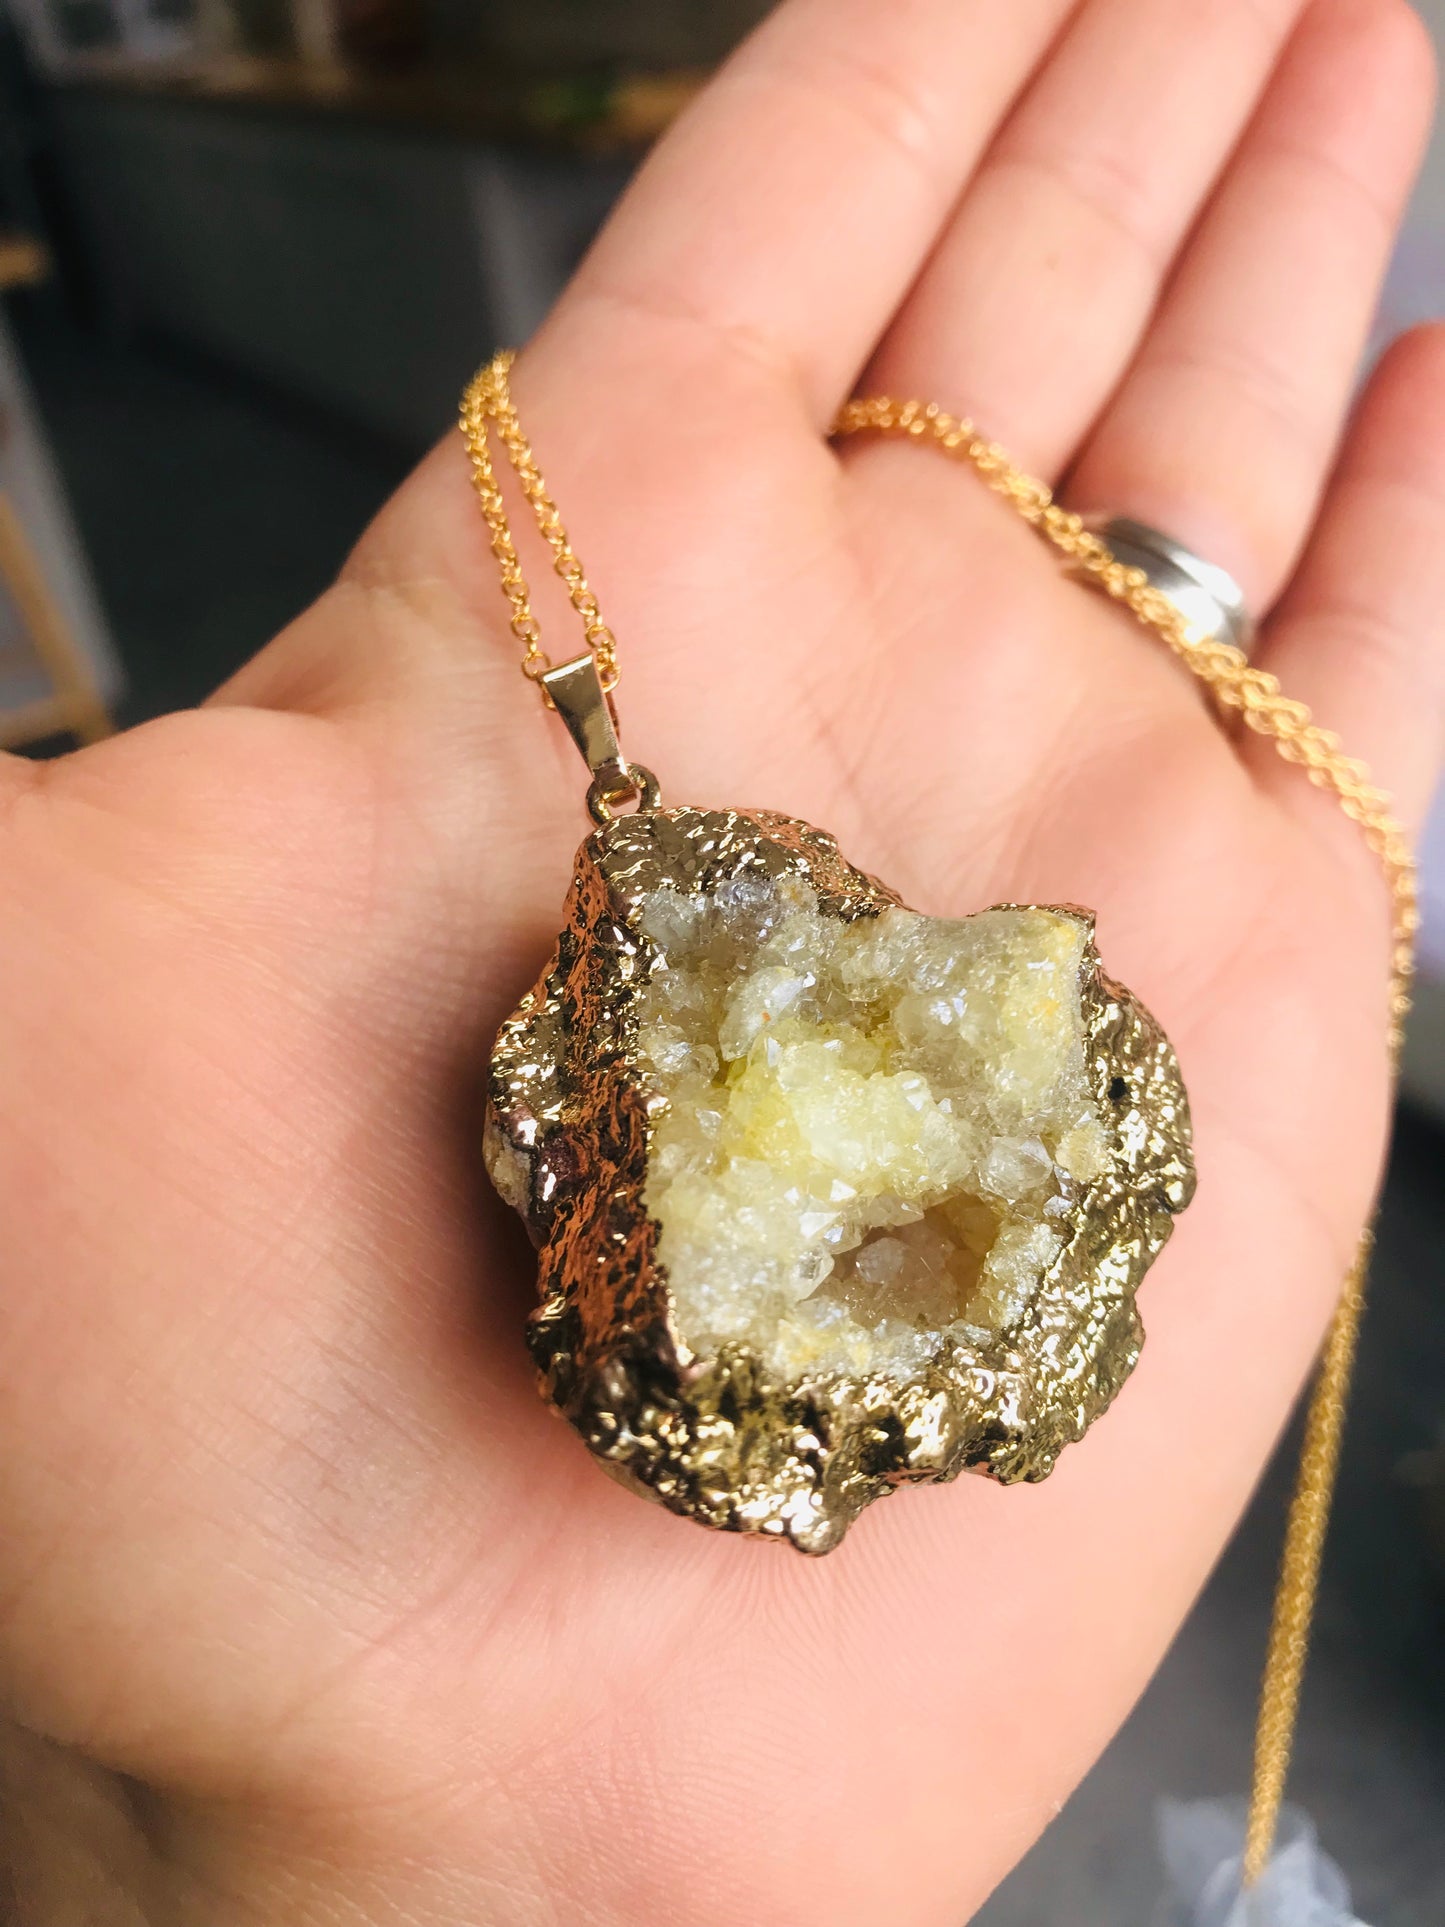 Druzy Crystal Healing Quartz Geode Pendant Necklace - Yellow - Crystal Boutique.co.uk 